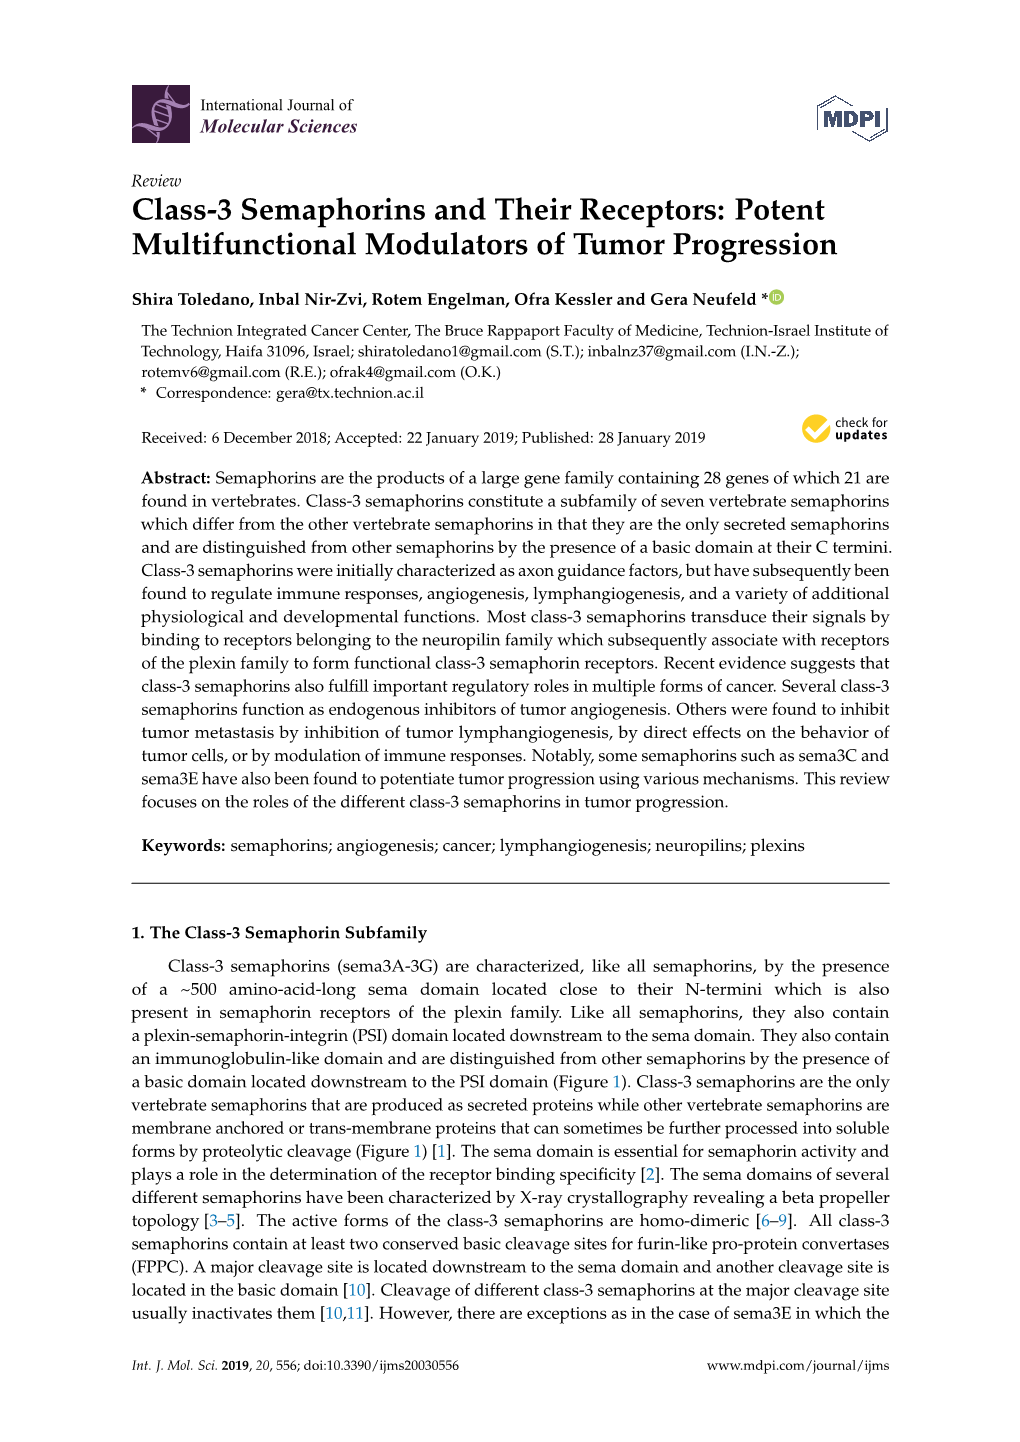 Class-3 Semaphorins and Their Receptors: Potent Multifunctional Modulators of Tumor Progression